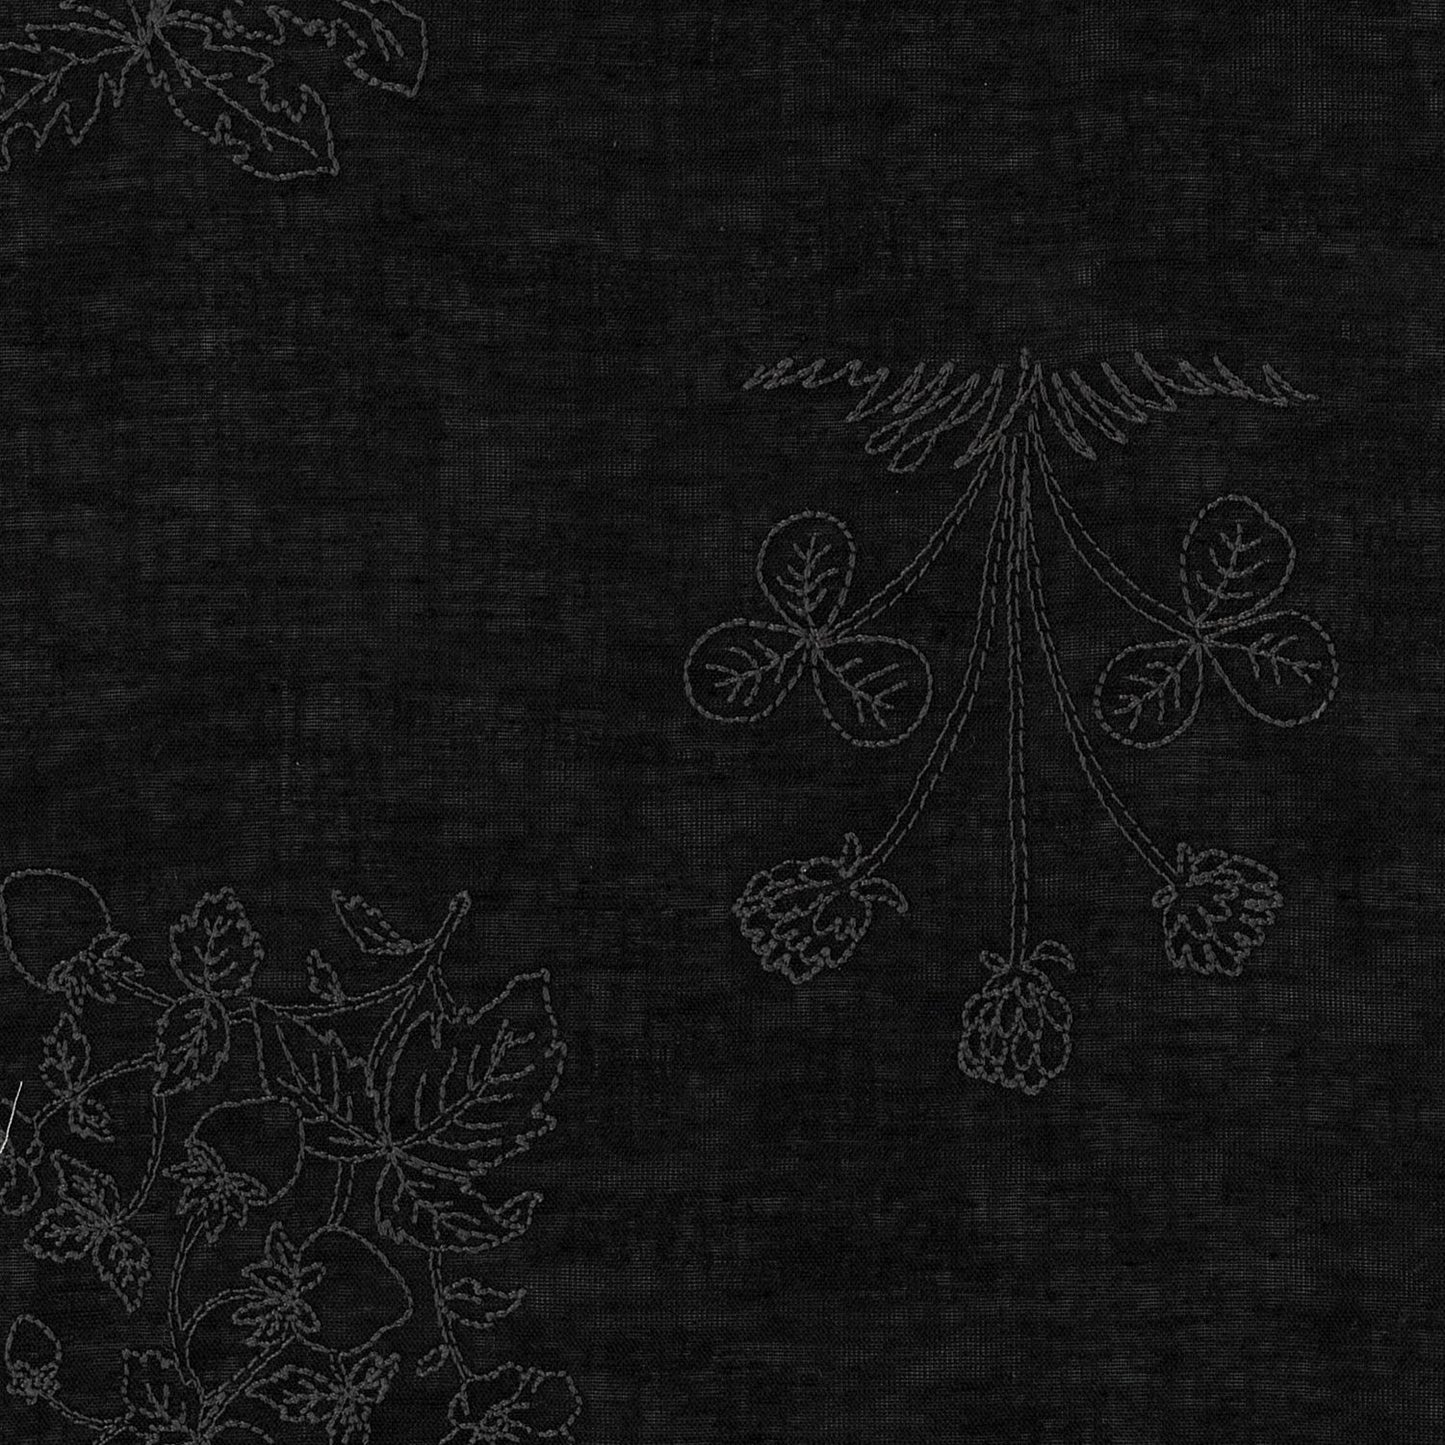 Embroidery Botanical Sheeting YKA-21070-1